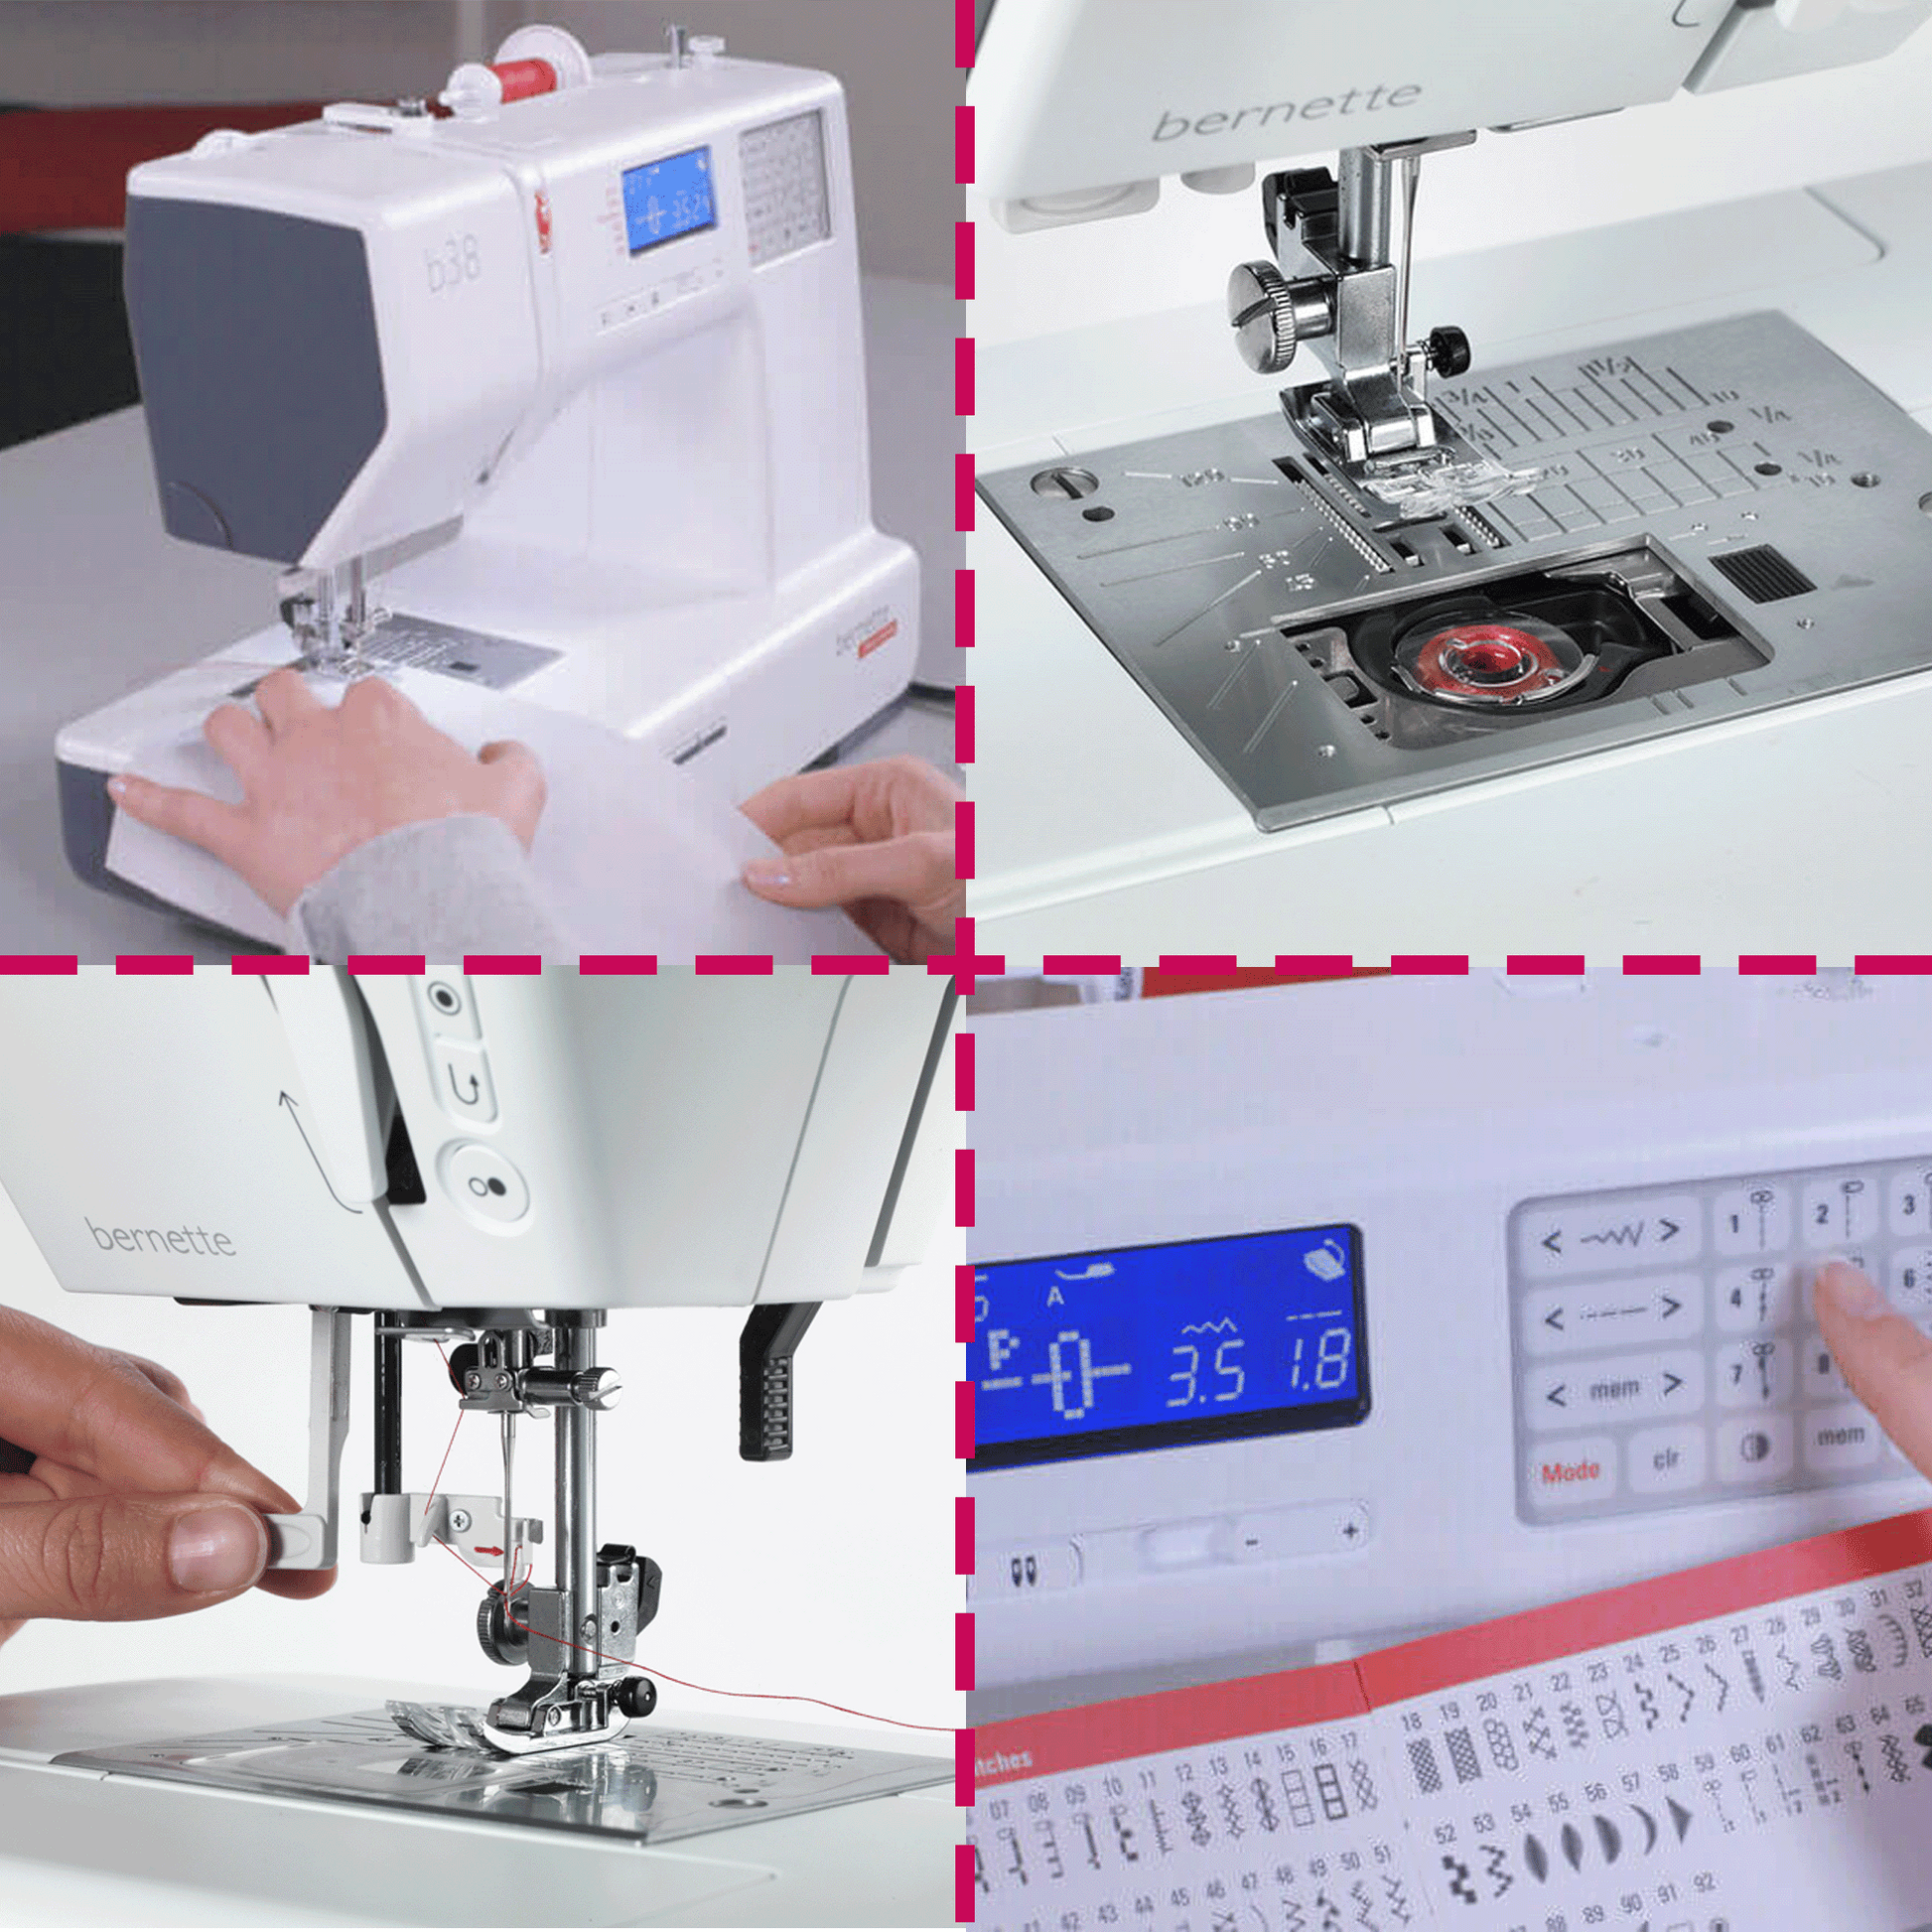 Bernette B38 Swiss Design Computerized Sewing Machine – Top Notch